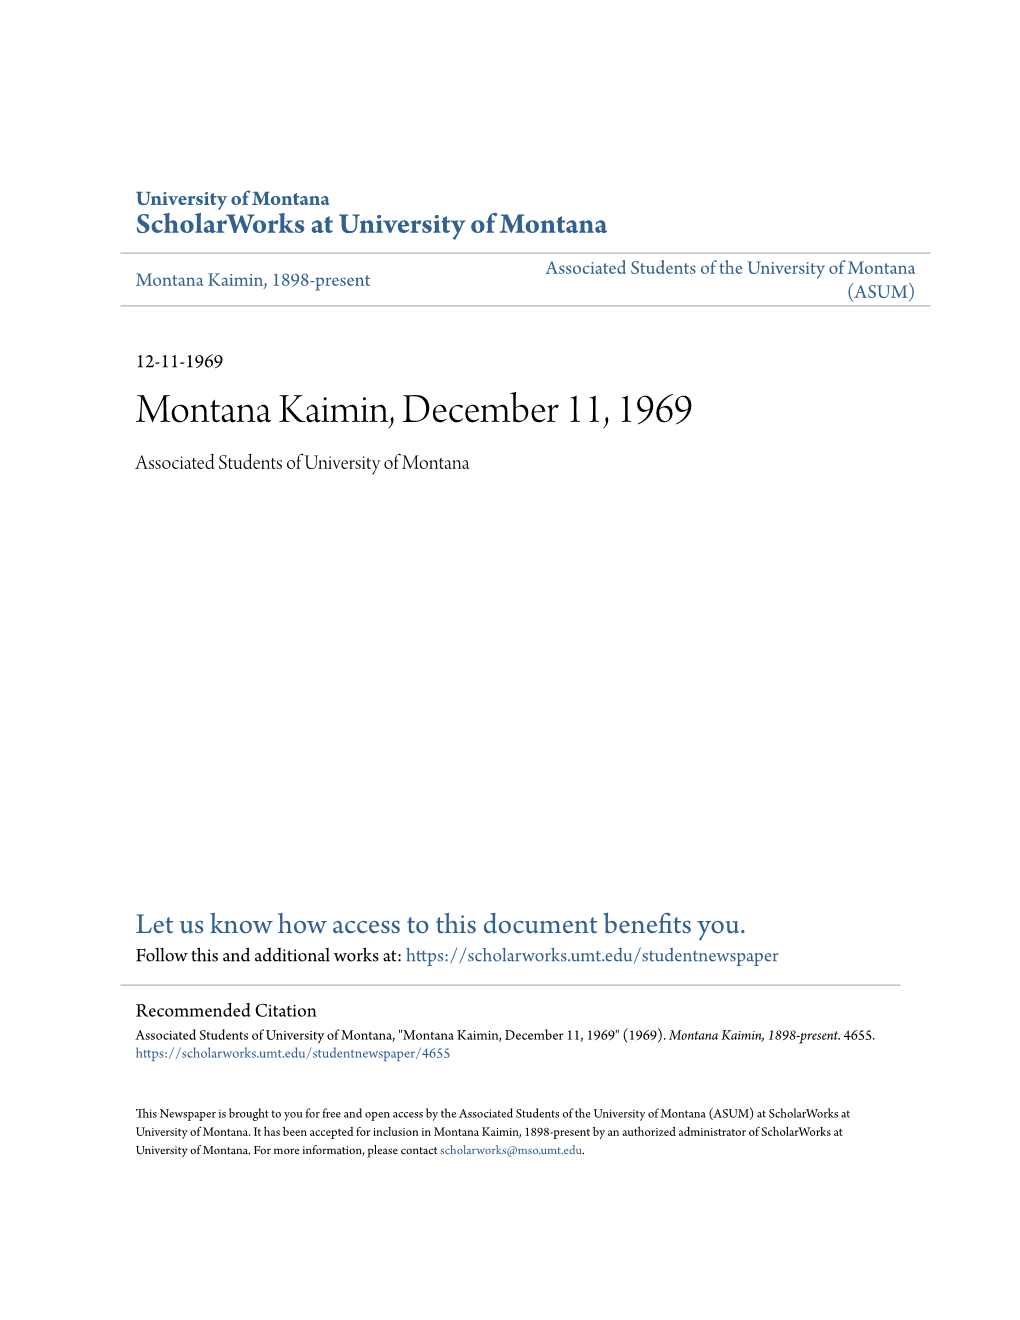 Montana Kaimin, December 11, 1969 Associated Students of University of Montana